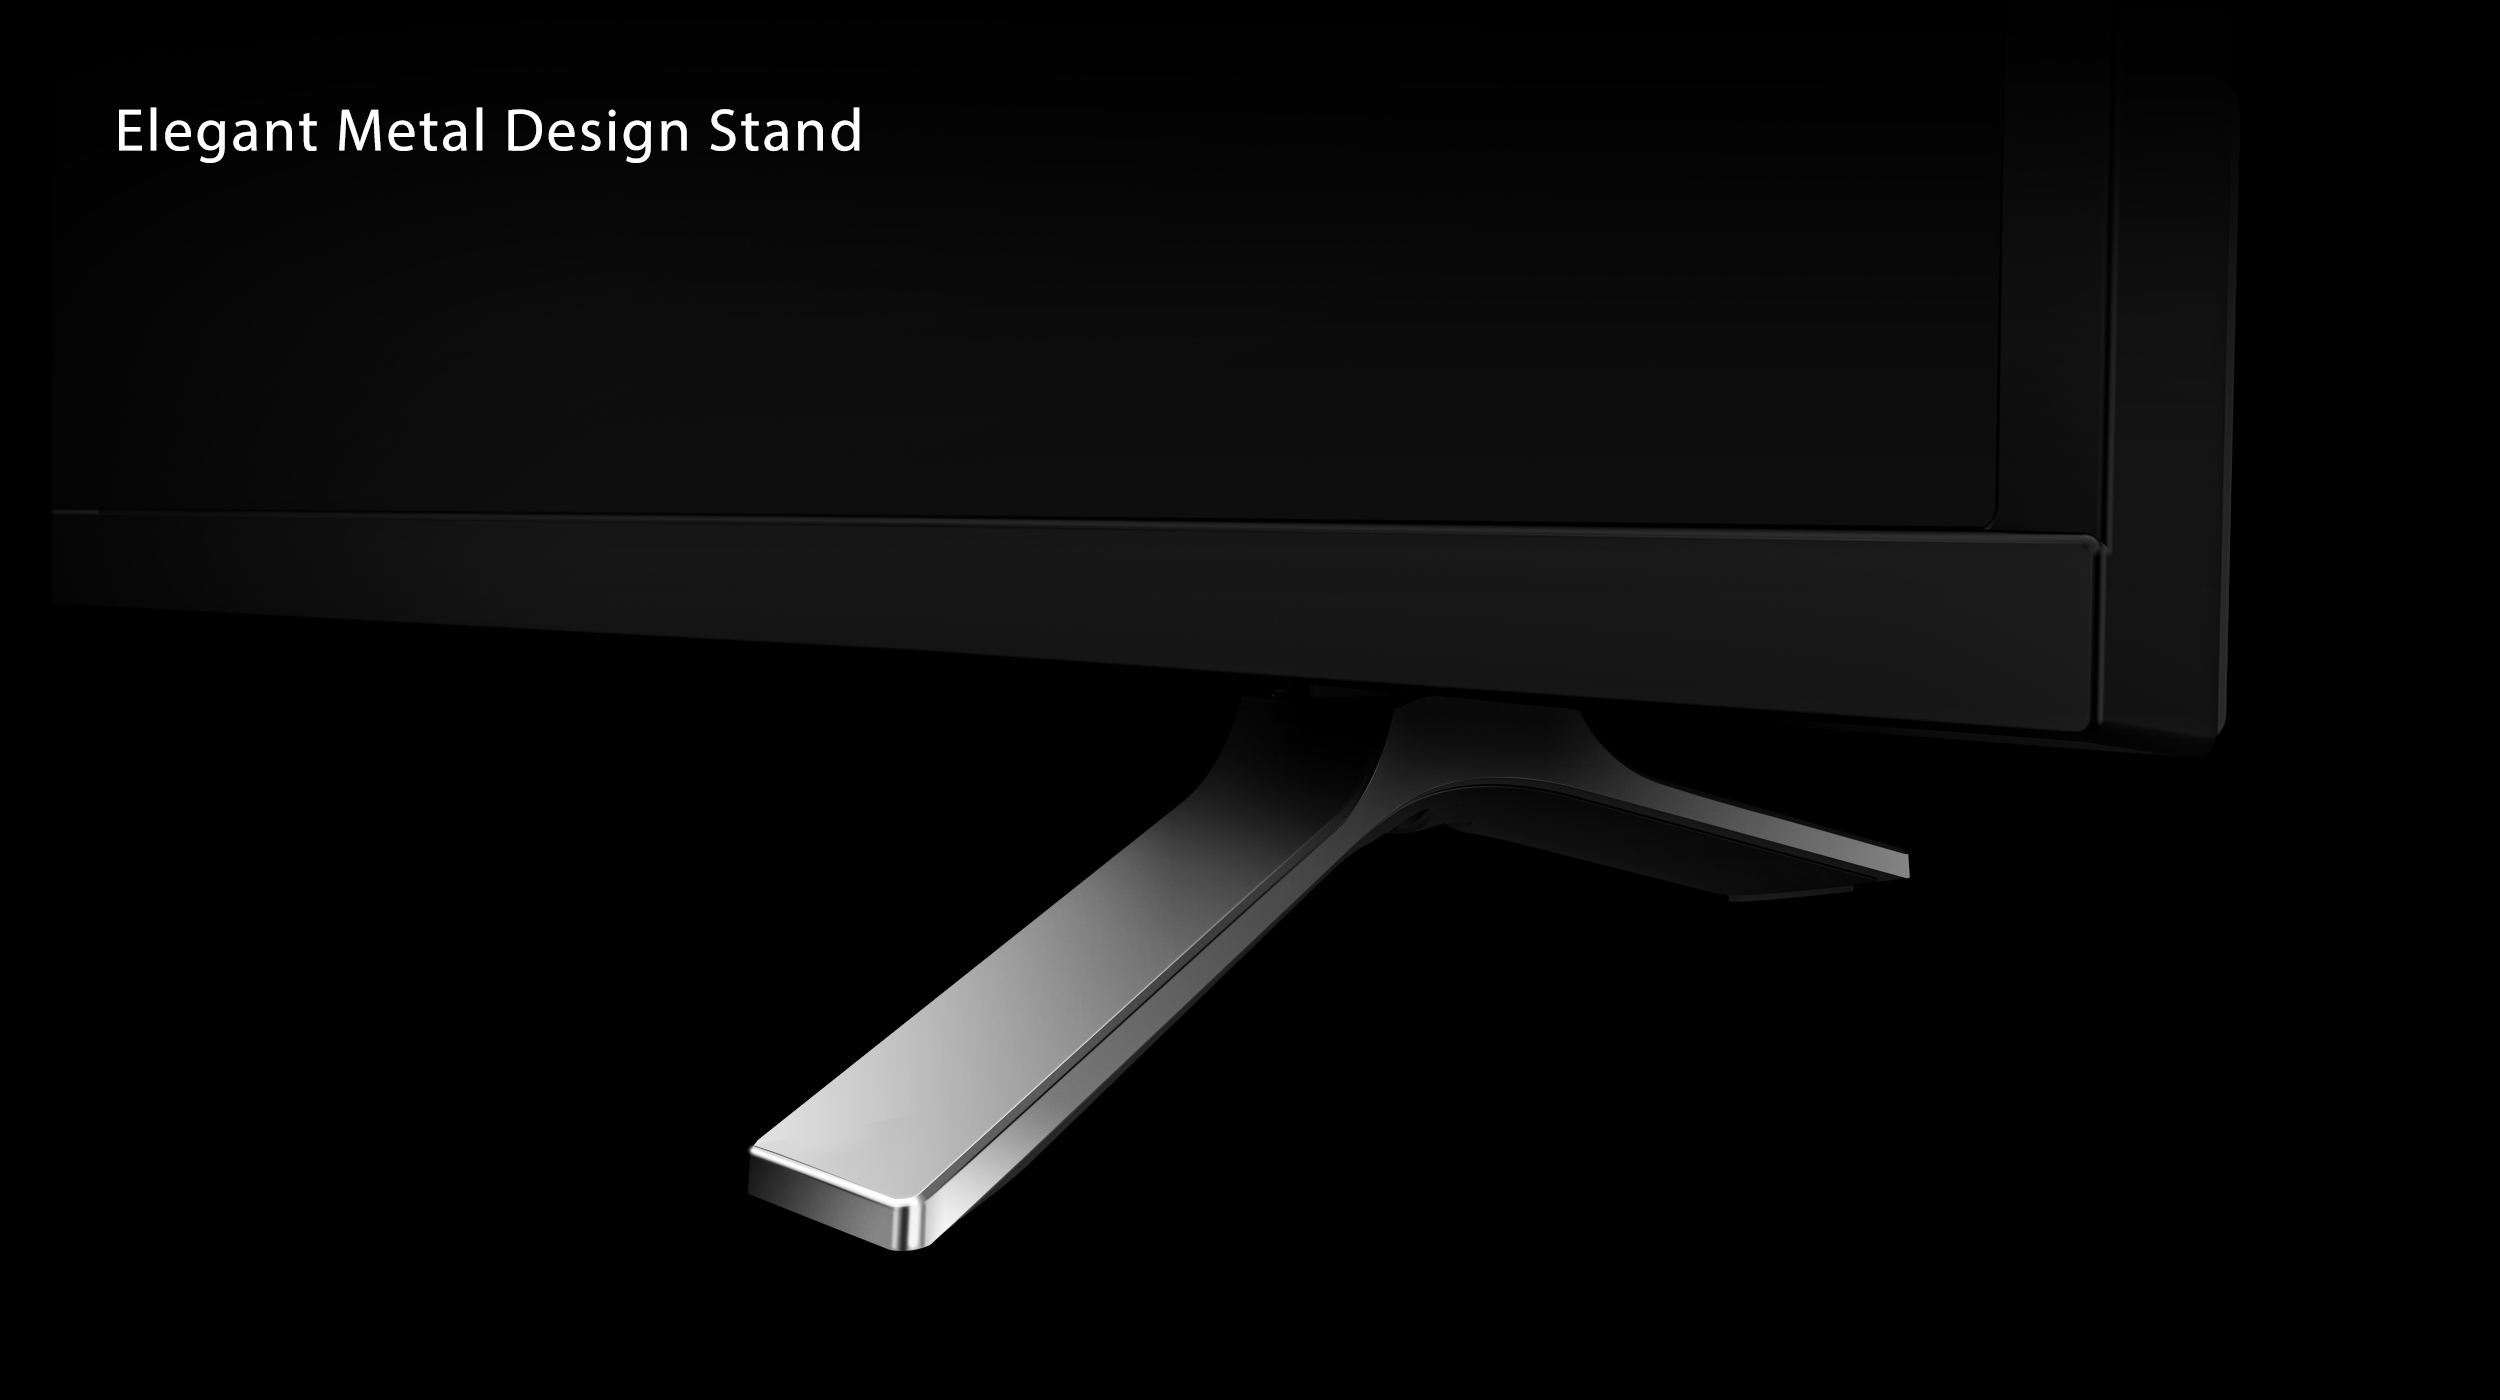 Toshiba Smart HD TV with elegant metal design stand